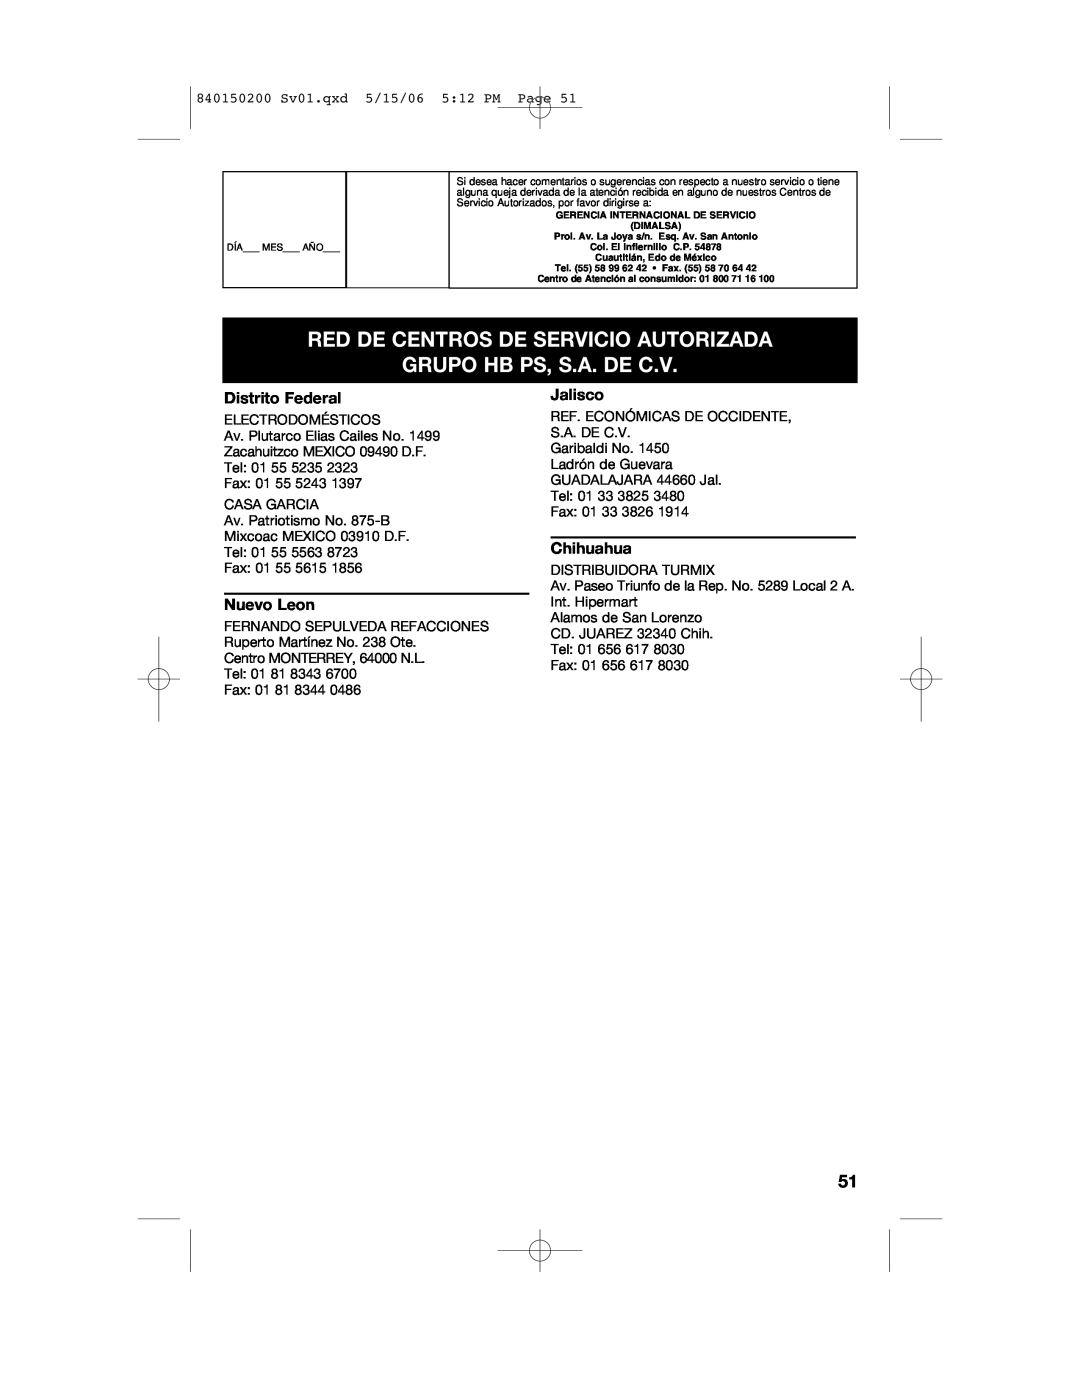 Proctor-Silex 840150200 manual Red De Centros De Servicio Autorizada Grupo Hb Ps, S.A. De C.V, Distrito Federal, Nuevo Leon 